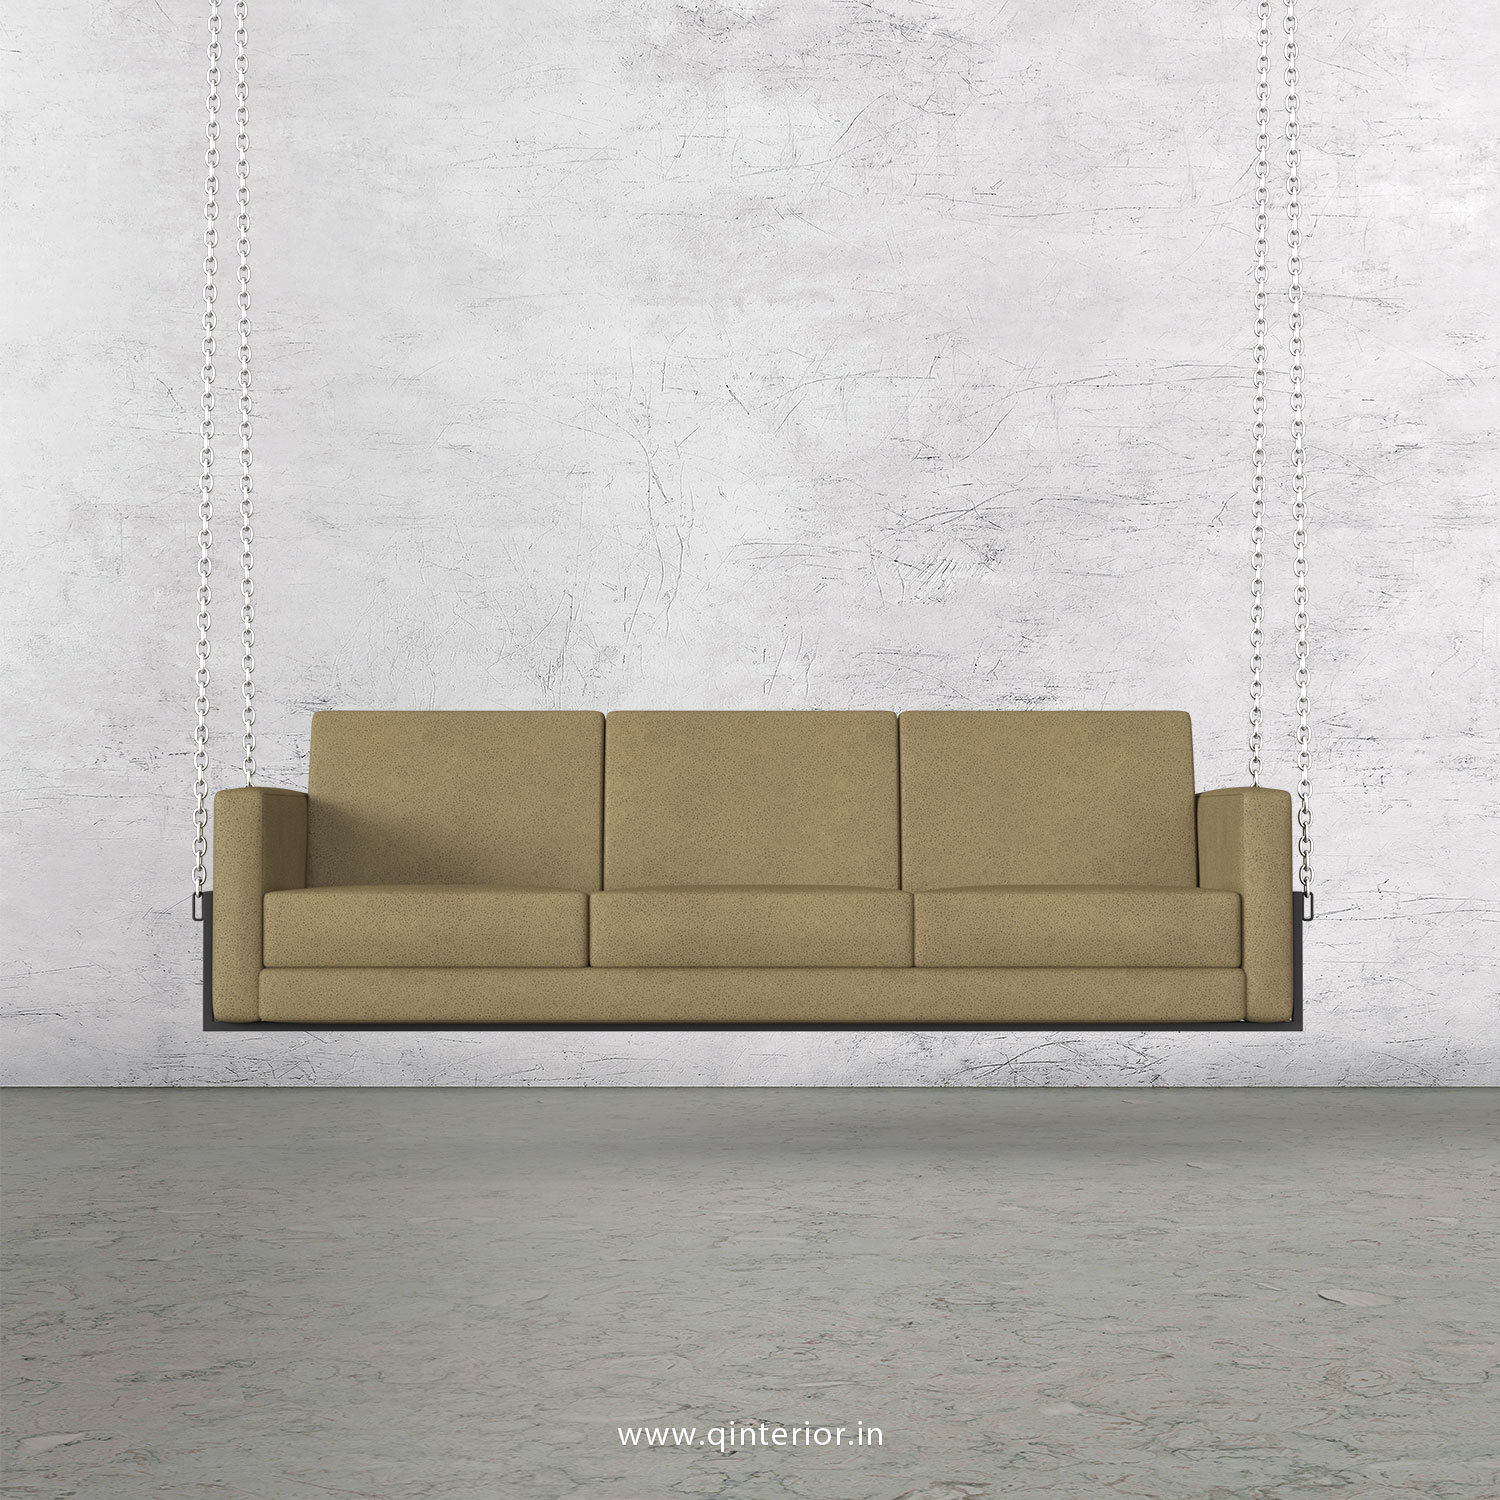 NIRVANA 3 Seater Swing Sofa in Fab Leather Fabric - SSF001 FL01